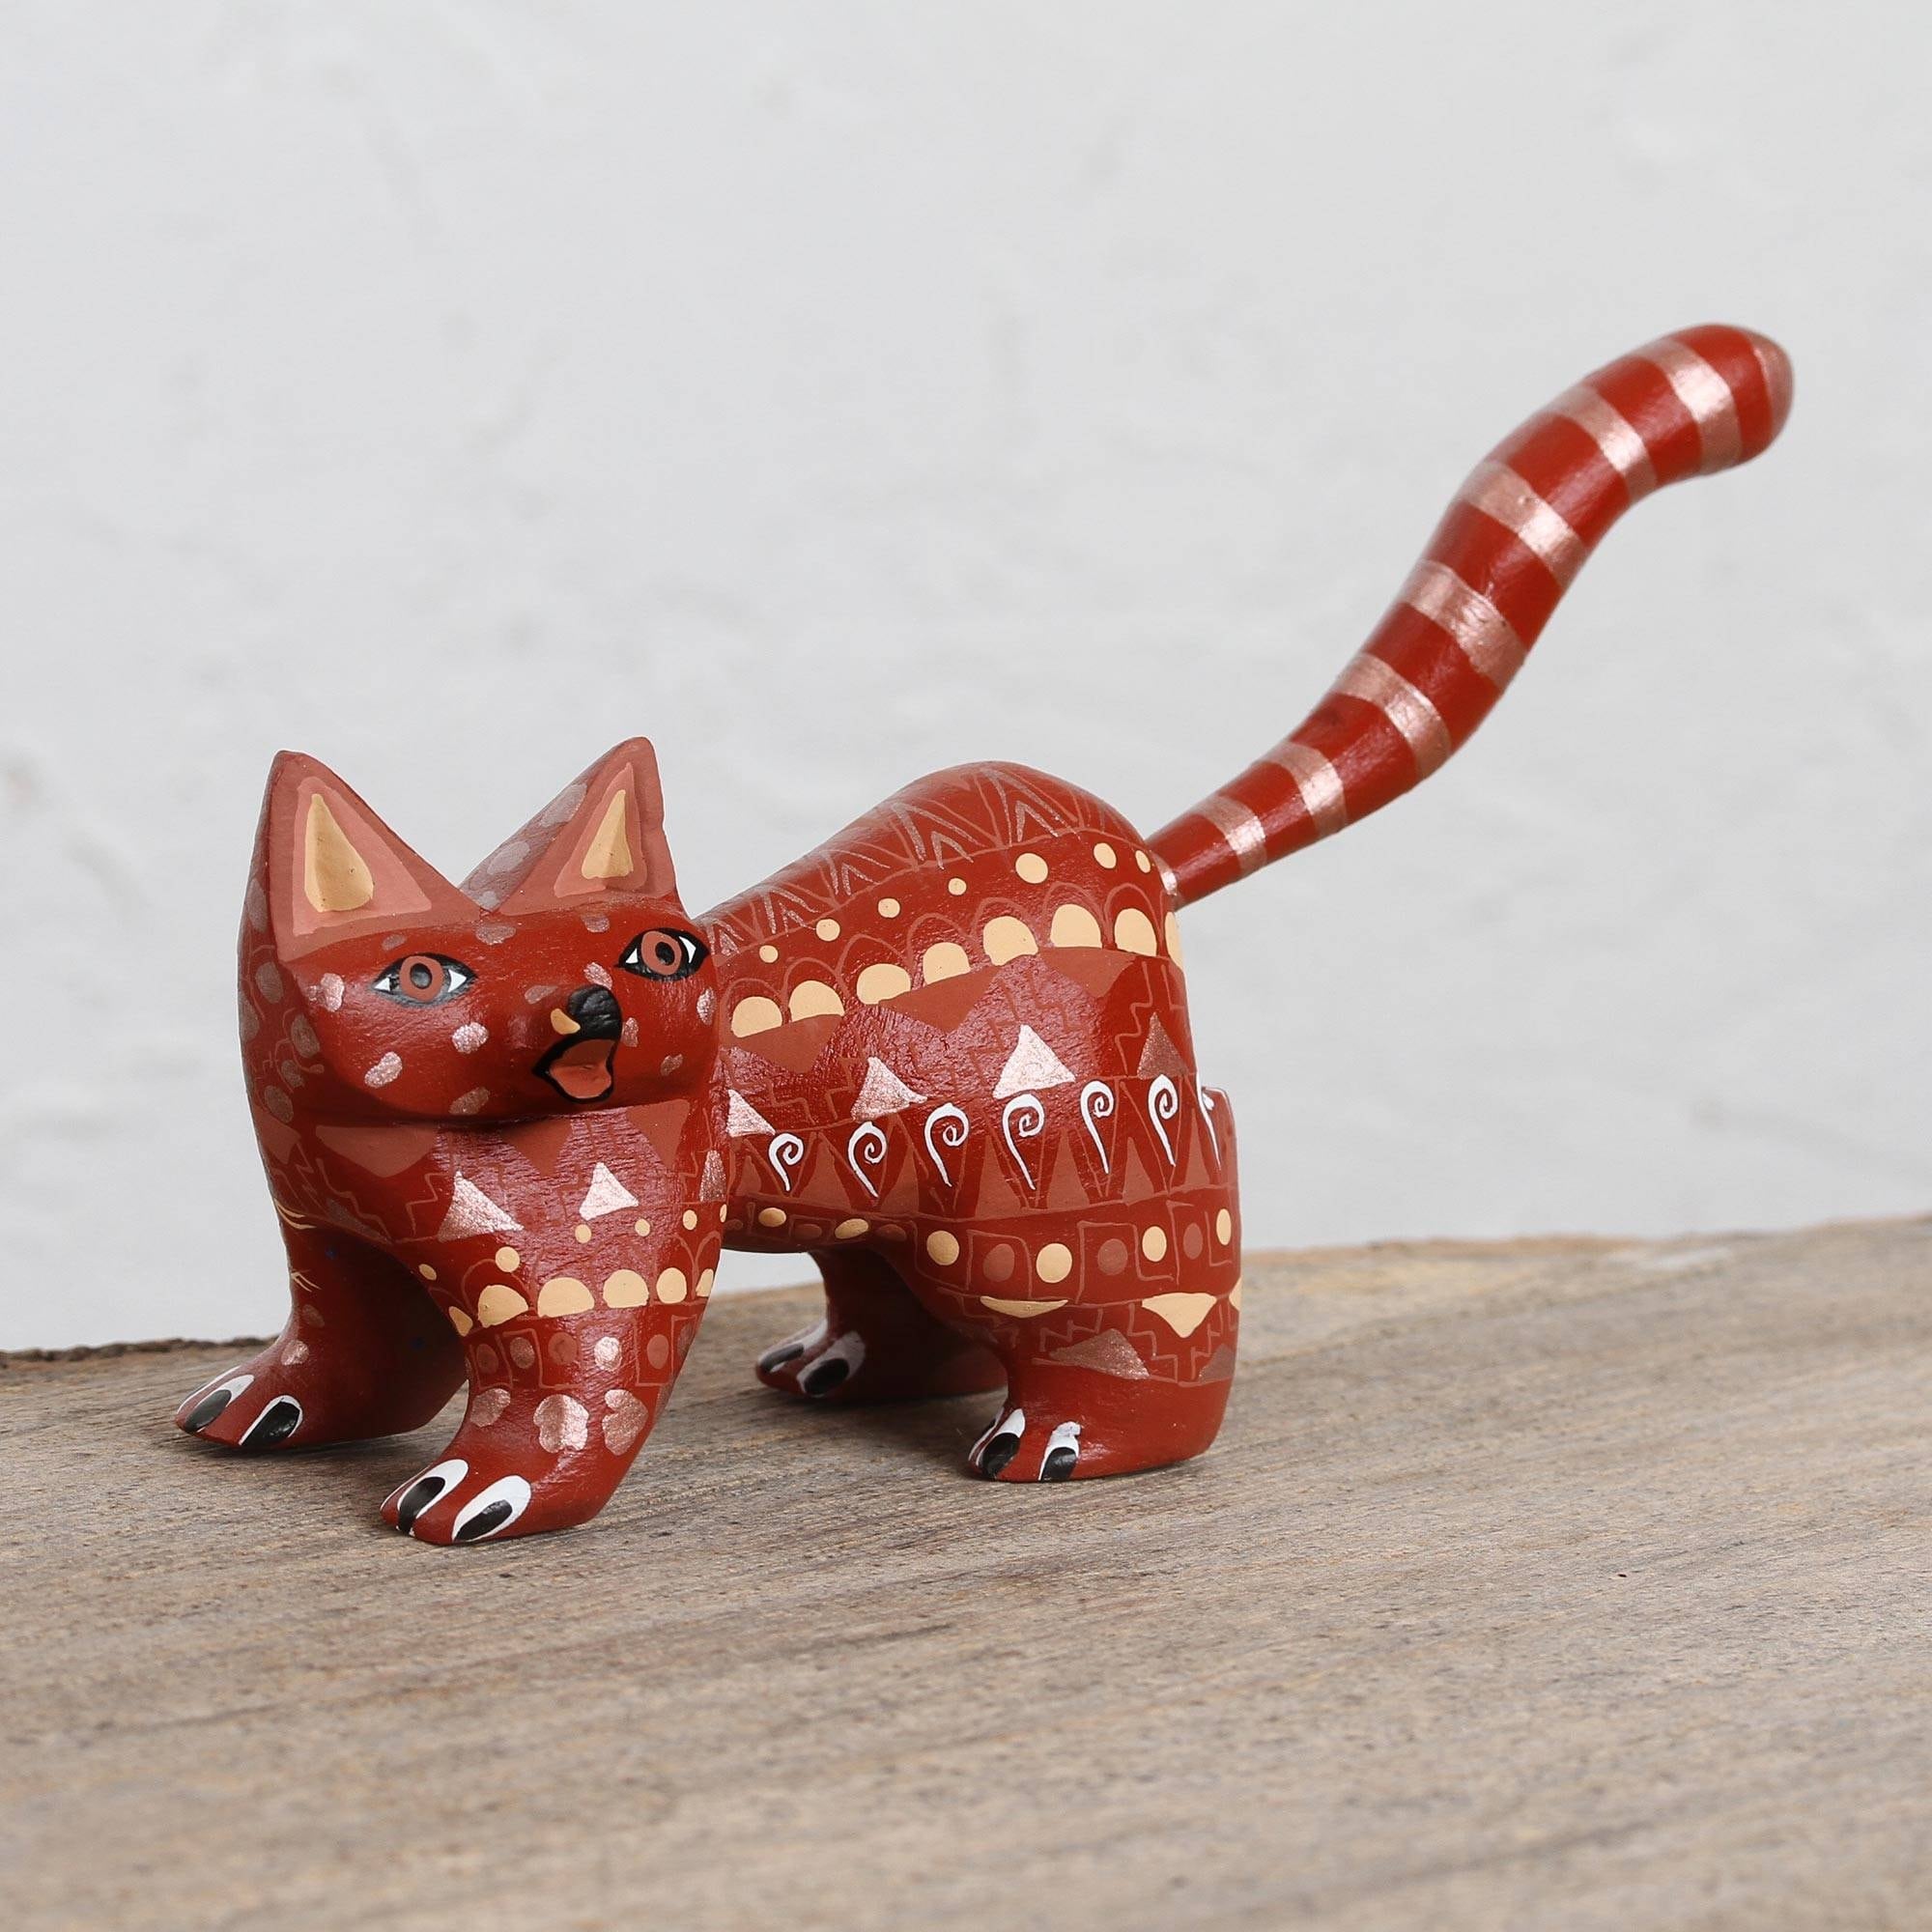 NOVICA Walking Cat, Wood alebrije figurine - 3.9" H x 7.5" W x 1.9" D